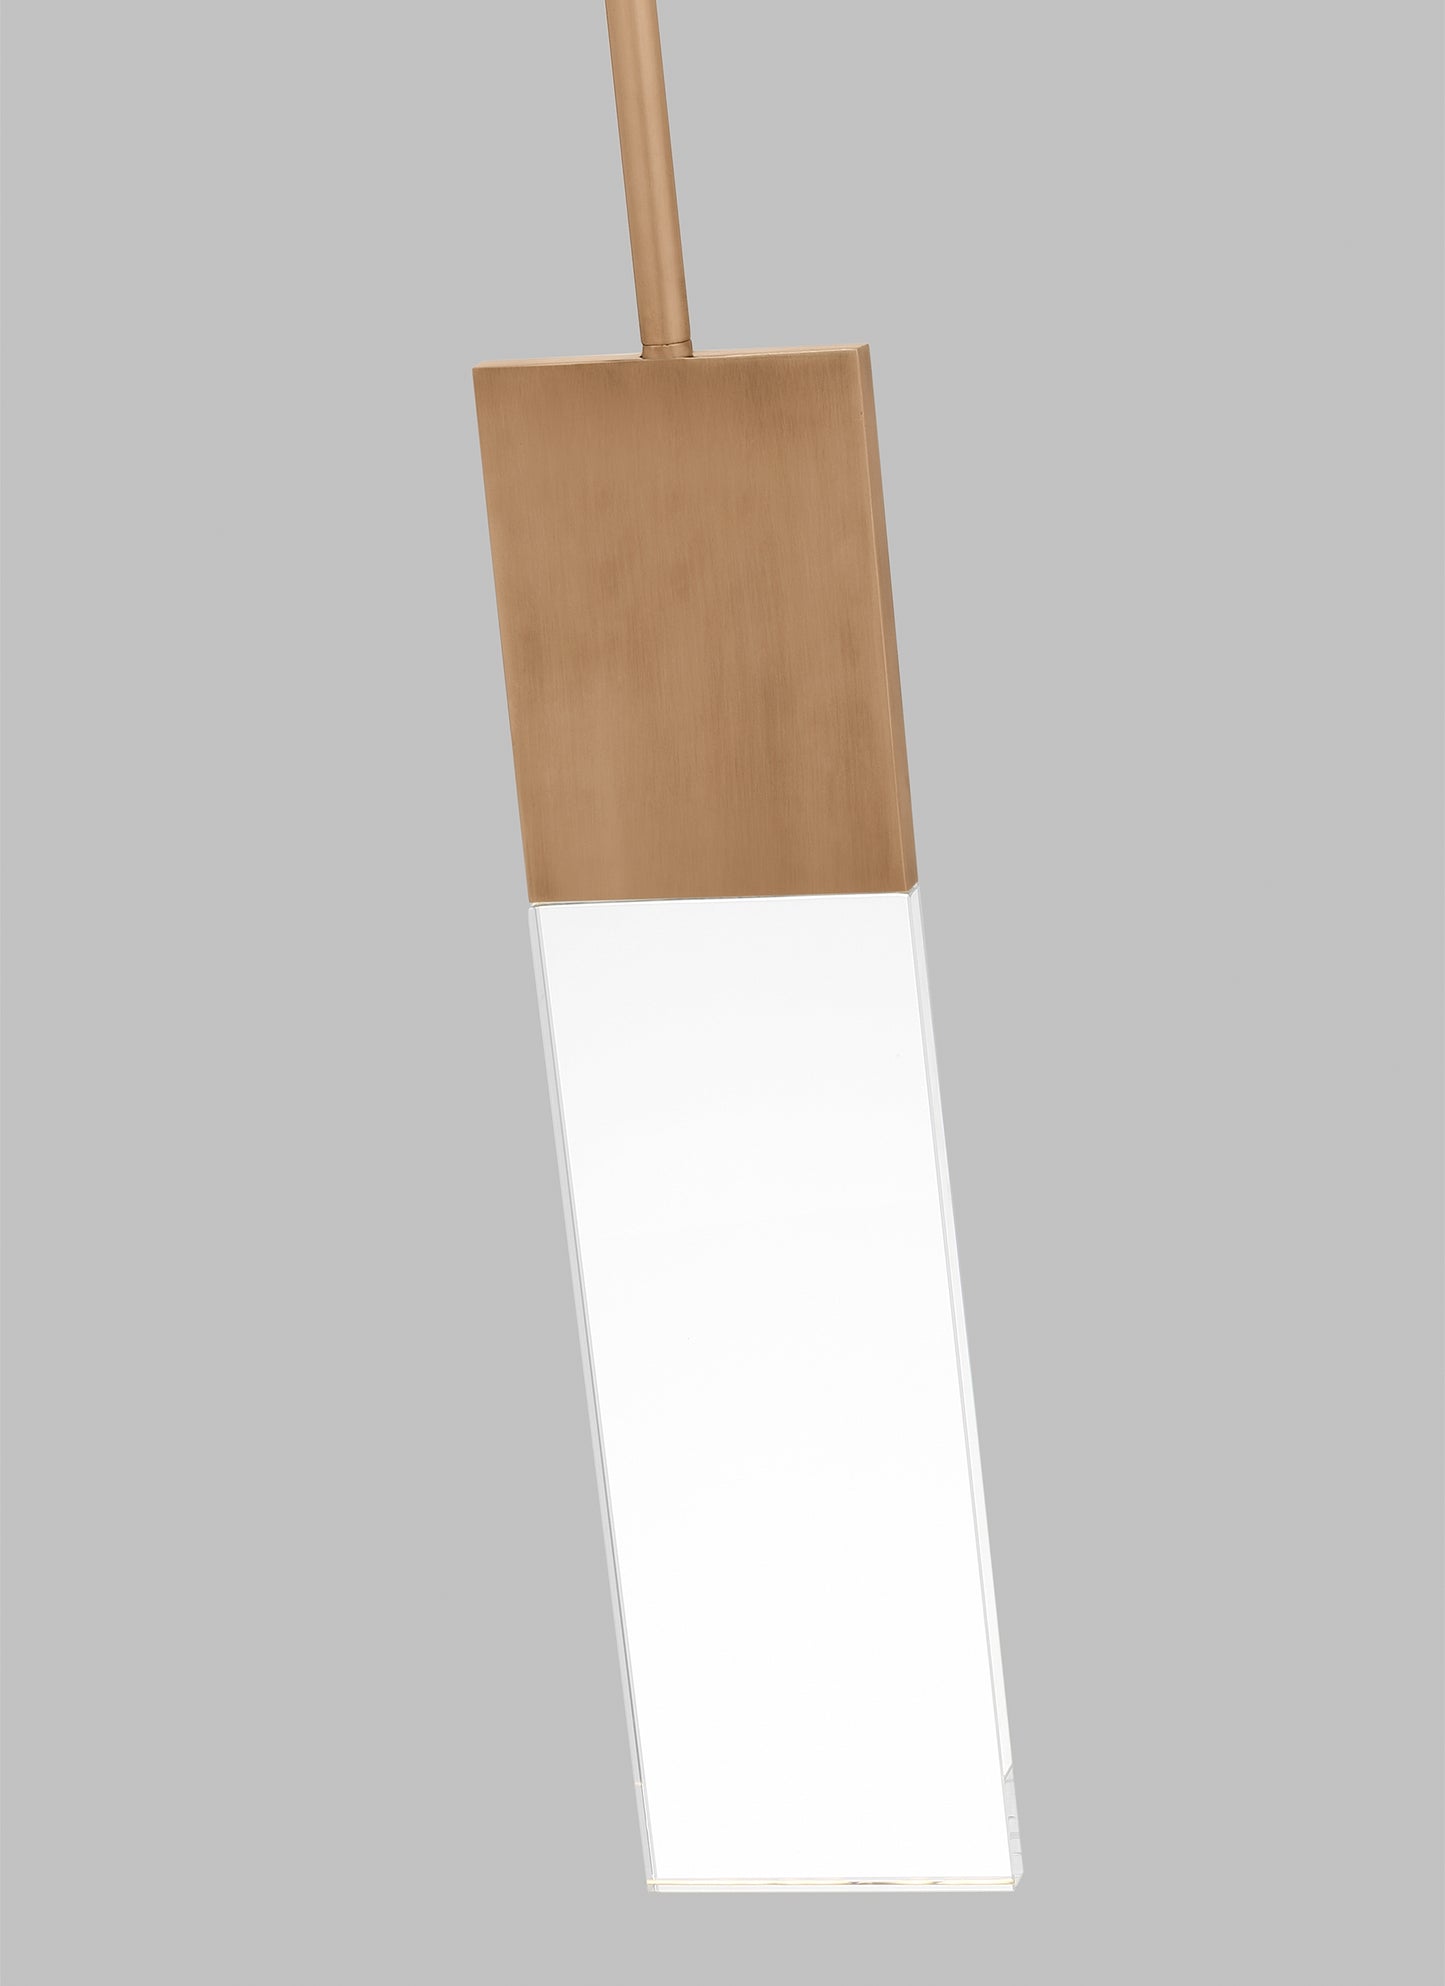 Metallic Finish Medium Pendant Light for Modern Decor